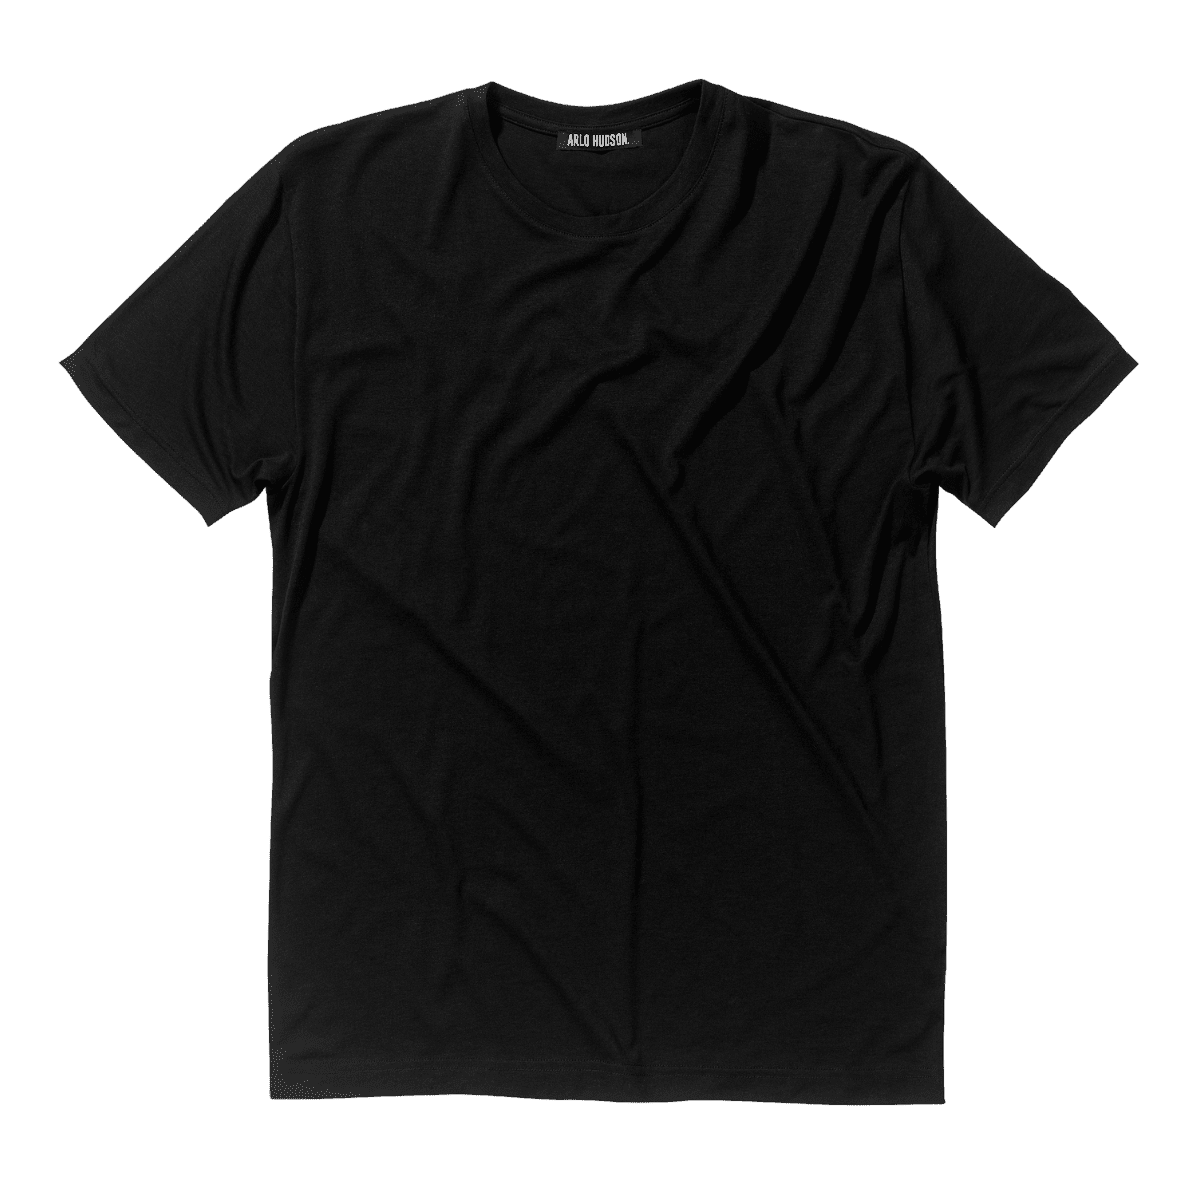 Black T-Shirt - Small